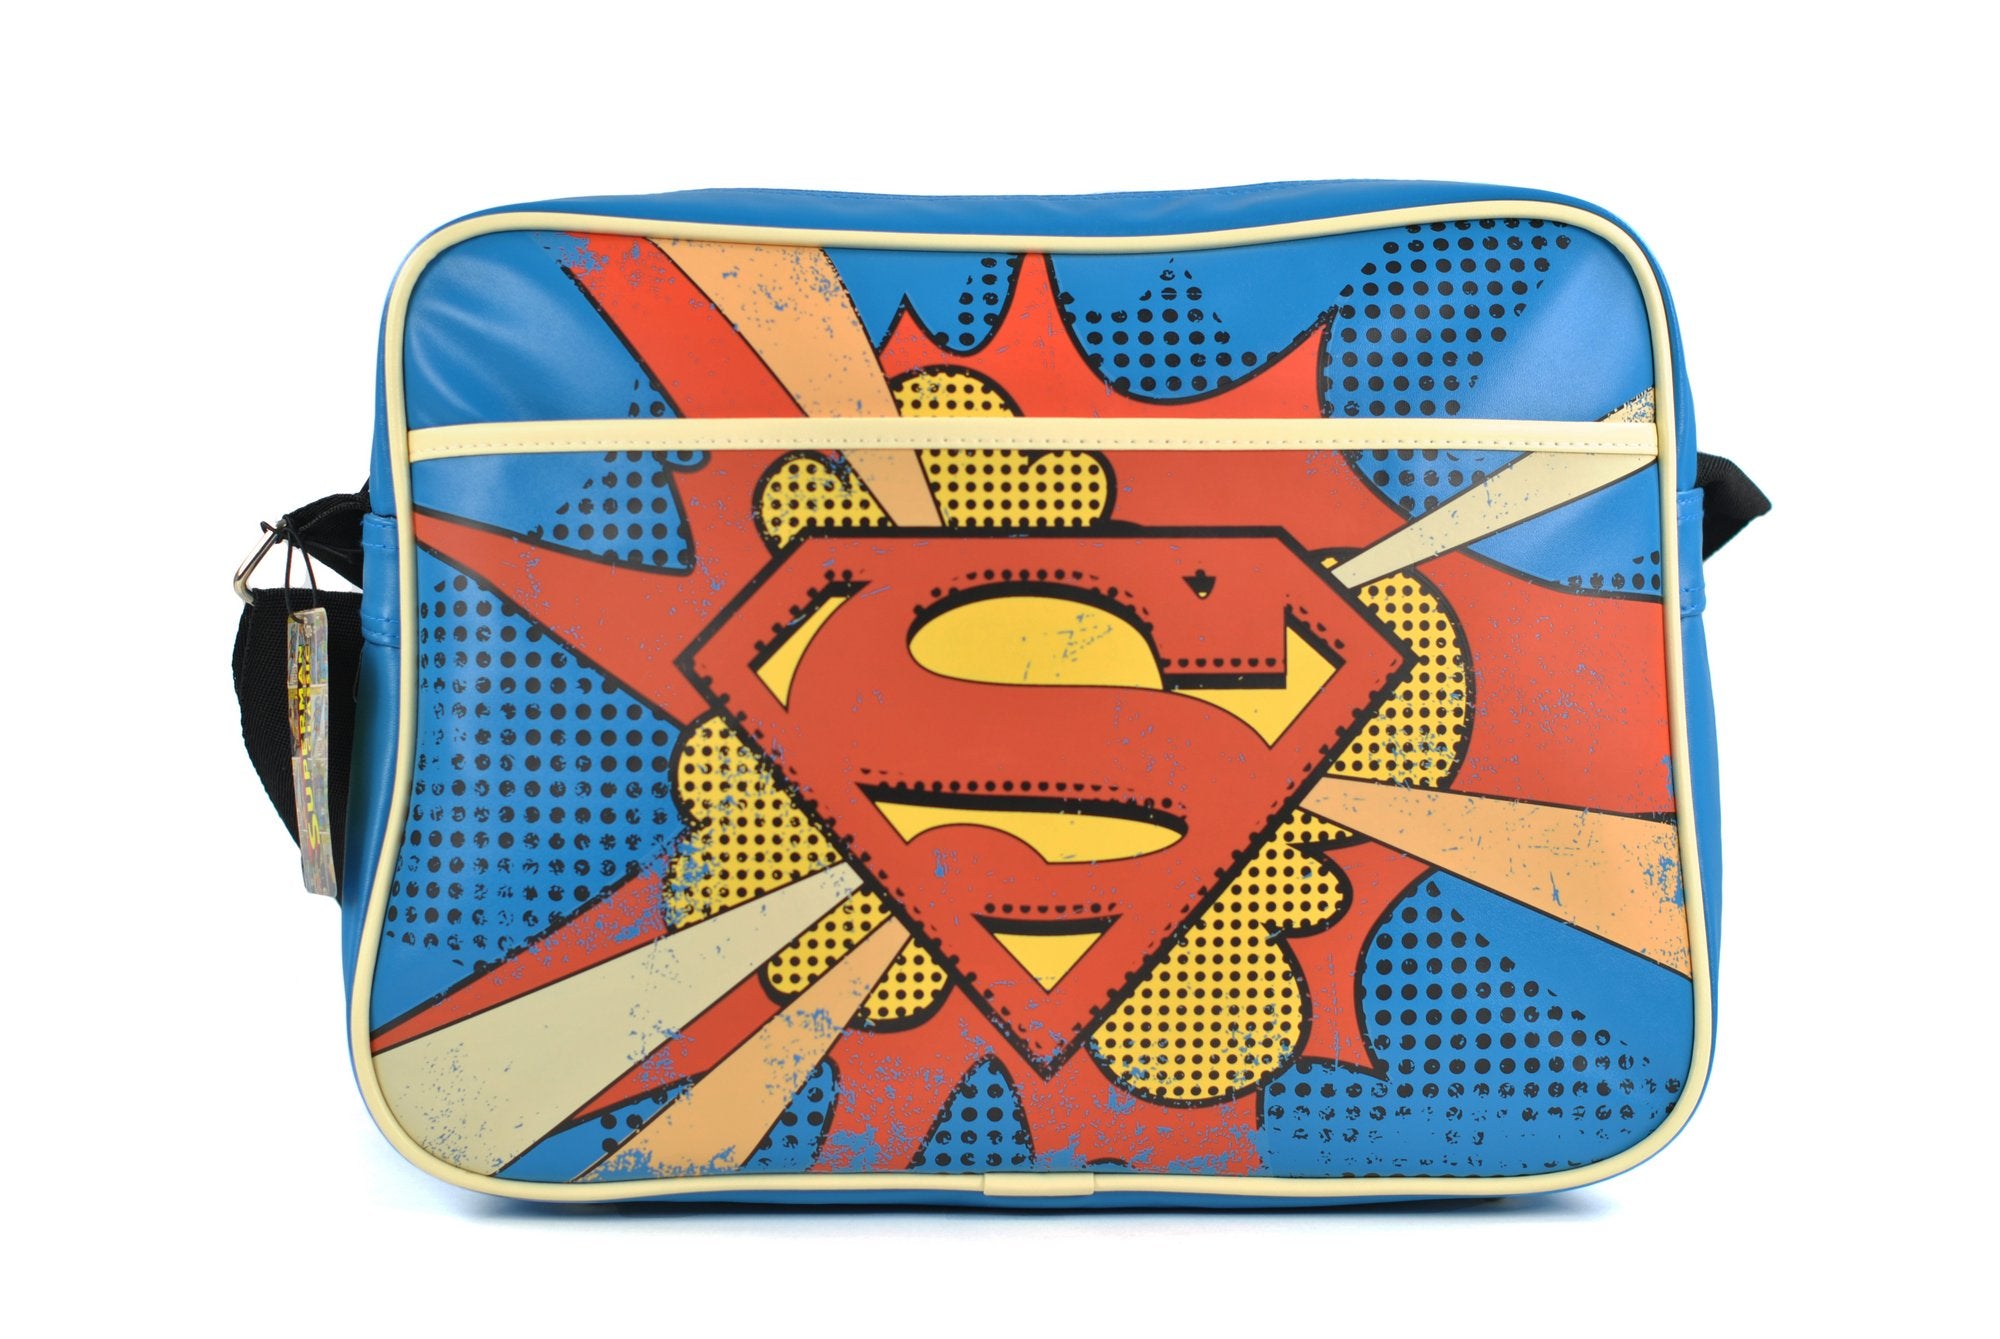 Superman Retro Bag